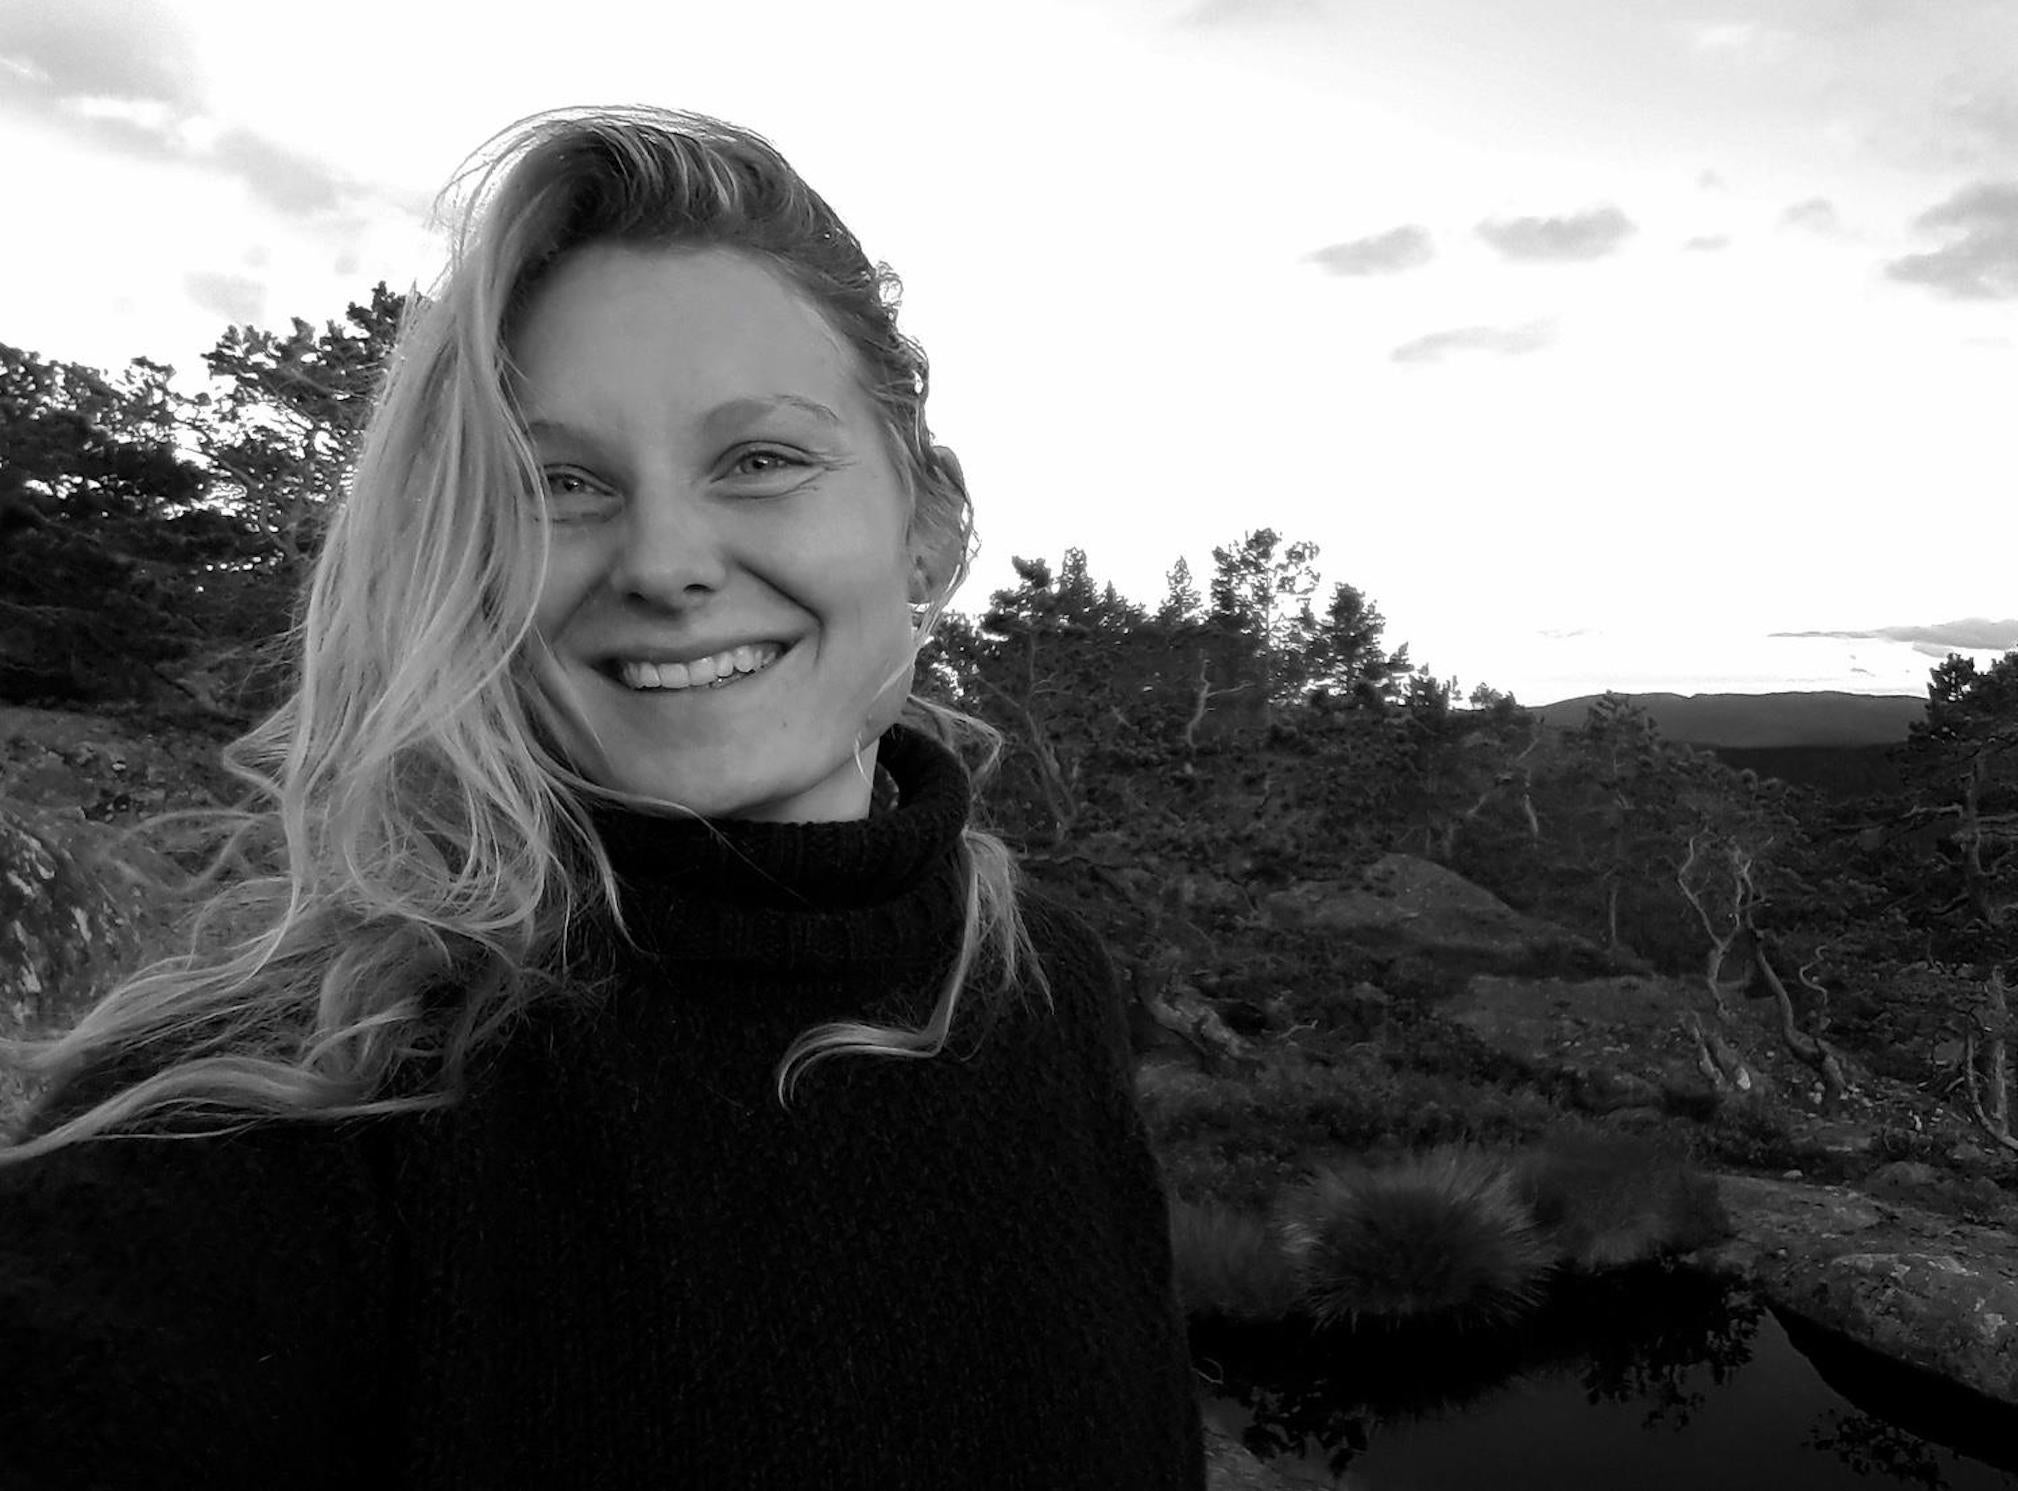 Louisa Vesterager Jespersen was murdered alongside her friend Maren Ueland while camping in Morocco’s Atlas Mountains